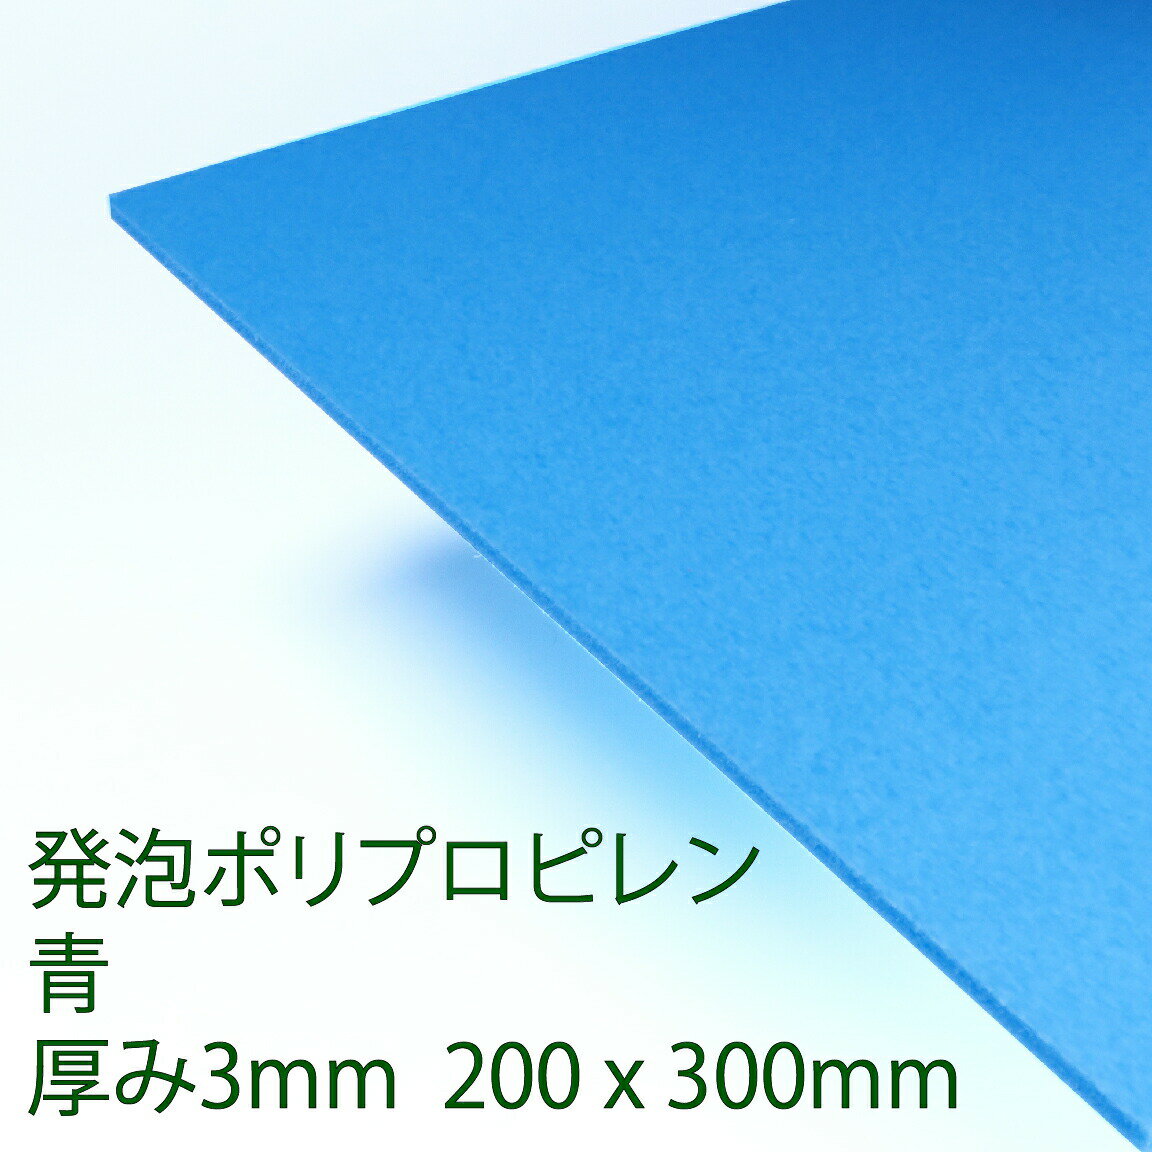 PPクラフトシート 発泡タイプ 青(HP4) 厚み3mm 200mm×300mm ポリプロピレン 軽量 印刷可能 仕切り板 DIY アクリサンデー